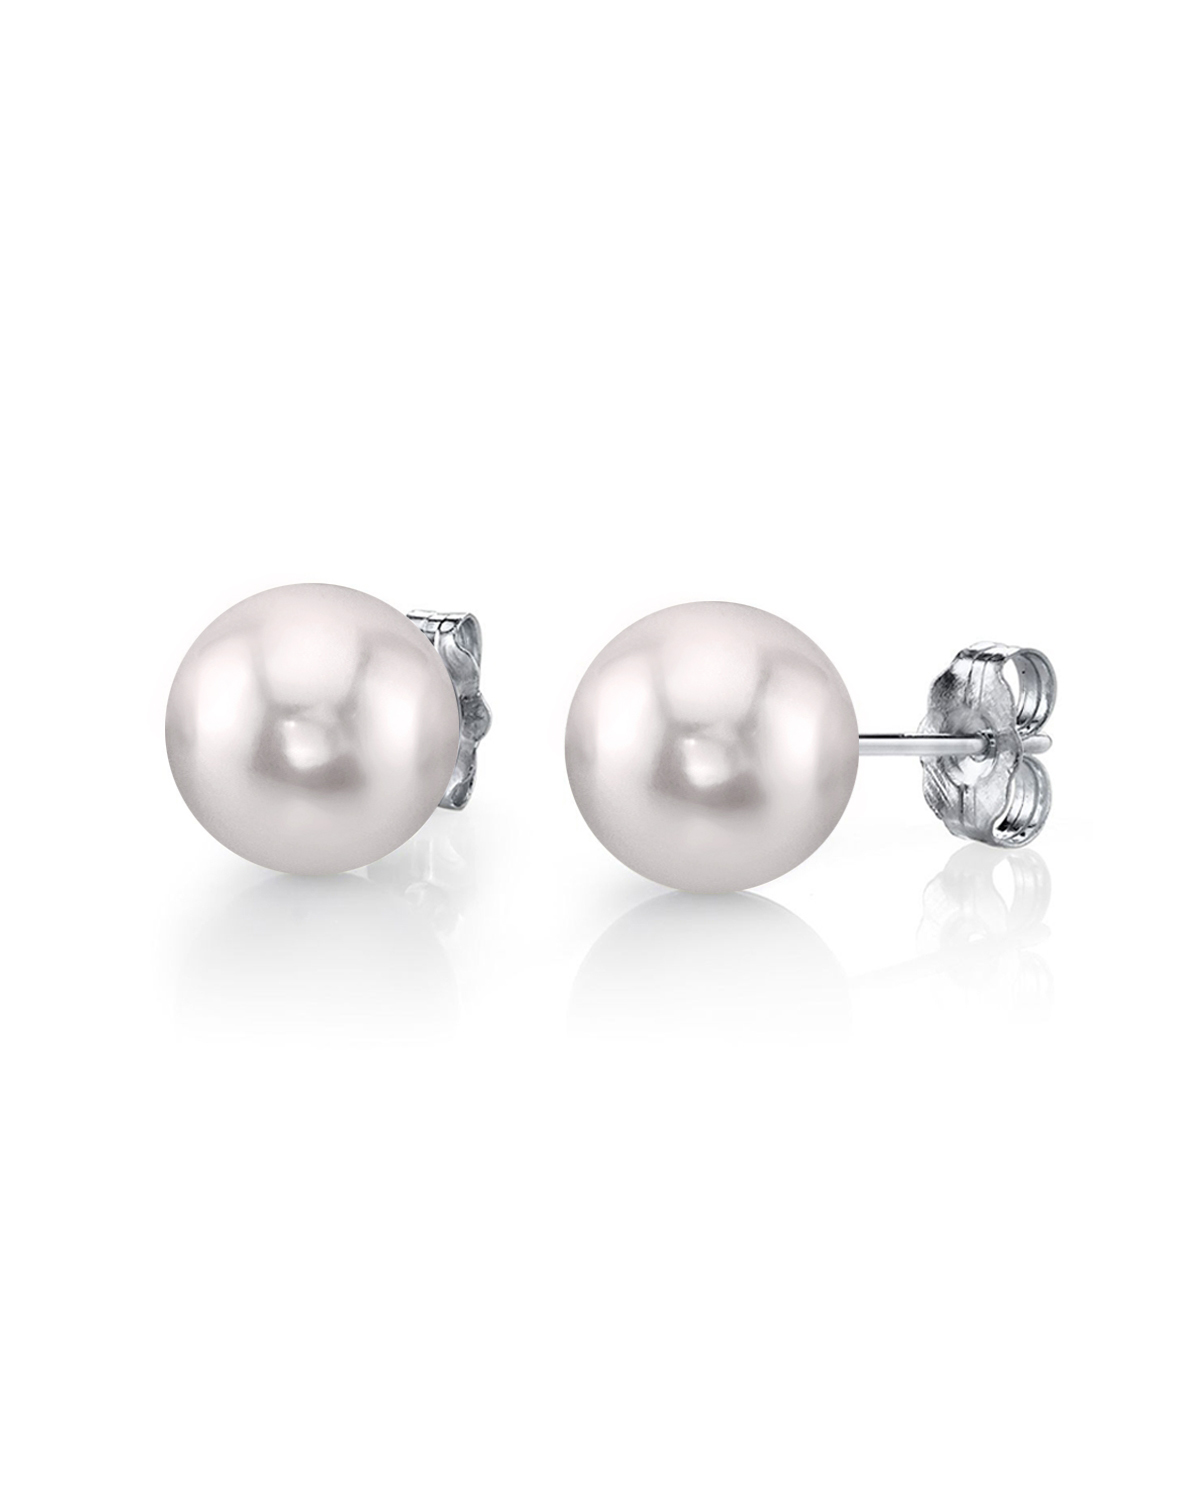 Pair of AAAA Japanese Akoya Loose Pearls White Loose Pearls for Pendant Earrings 